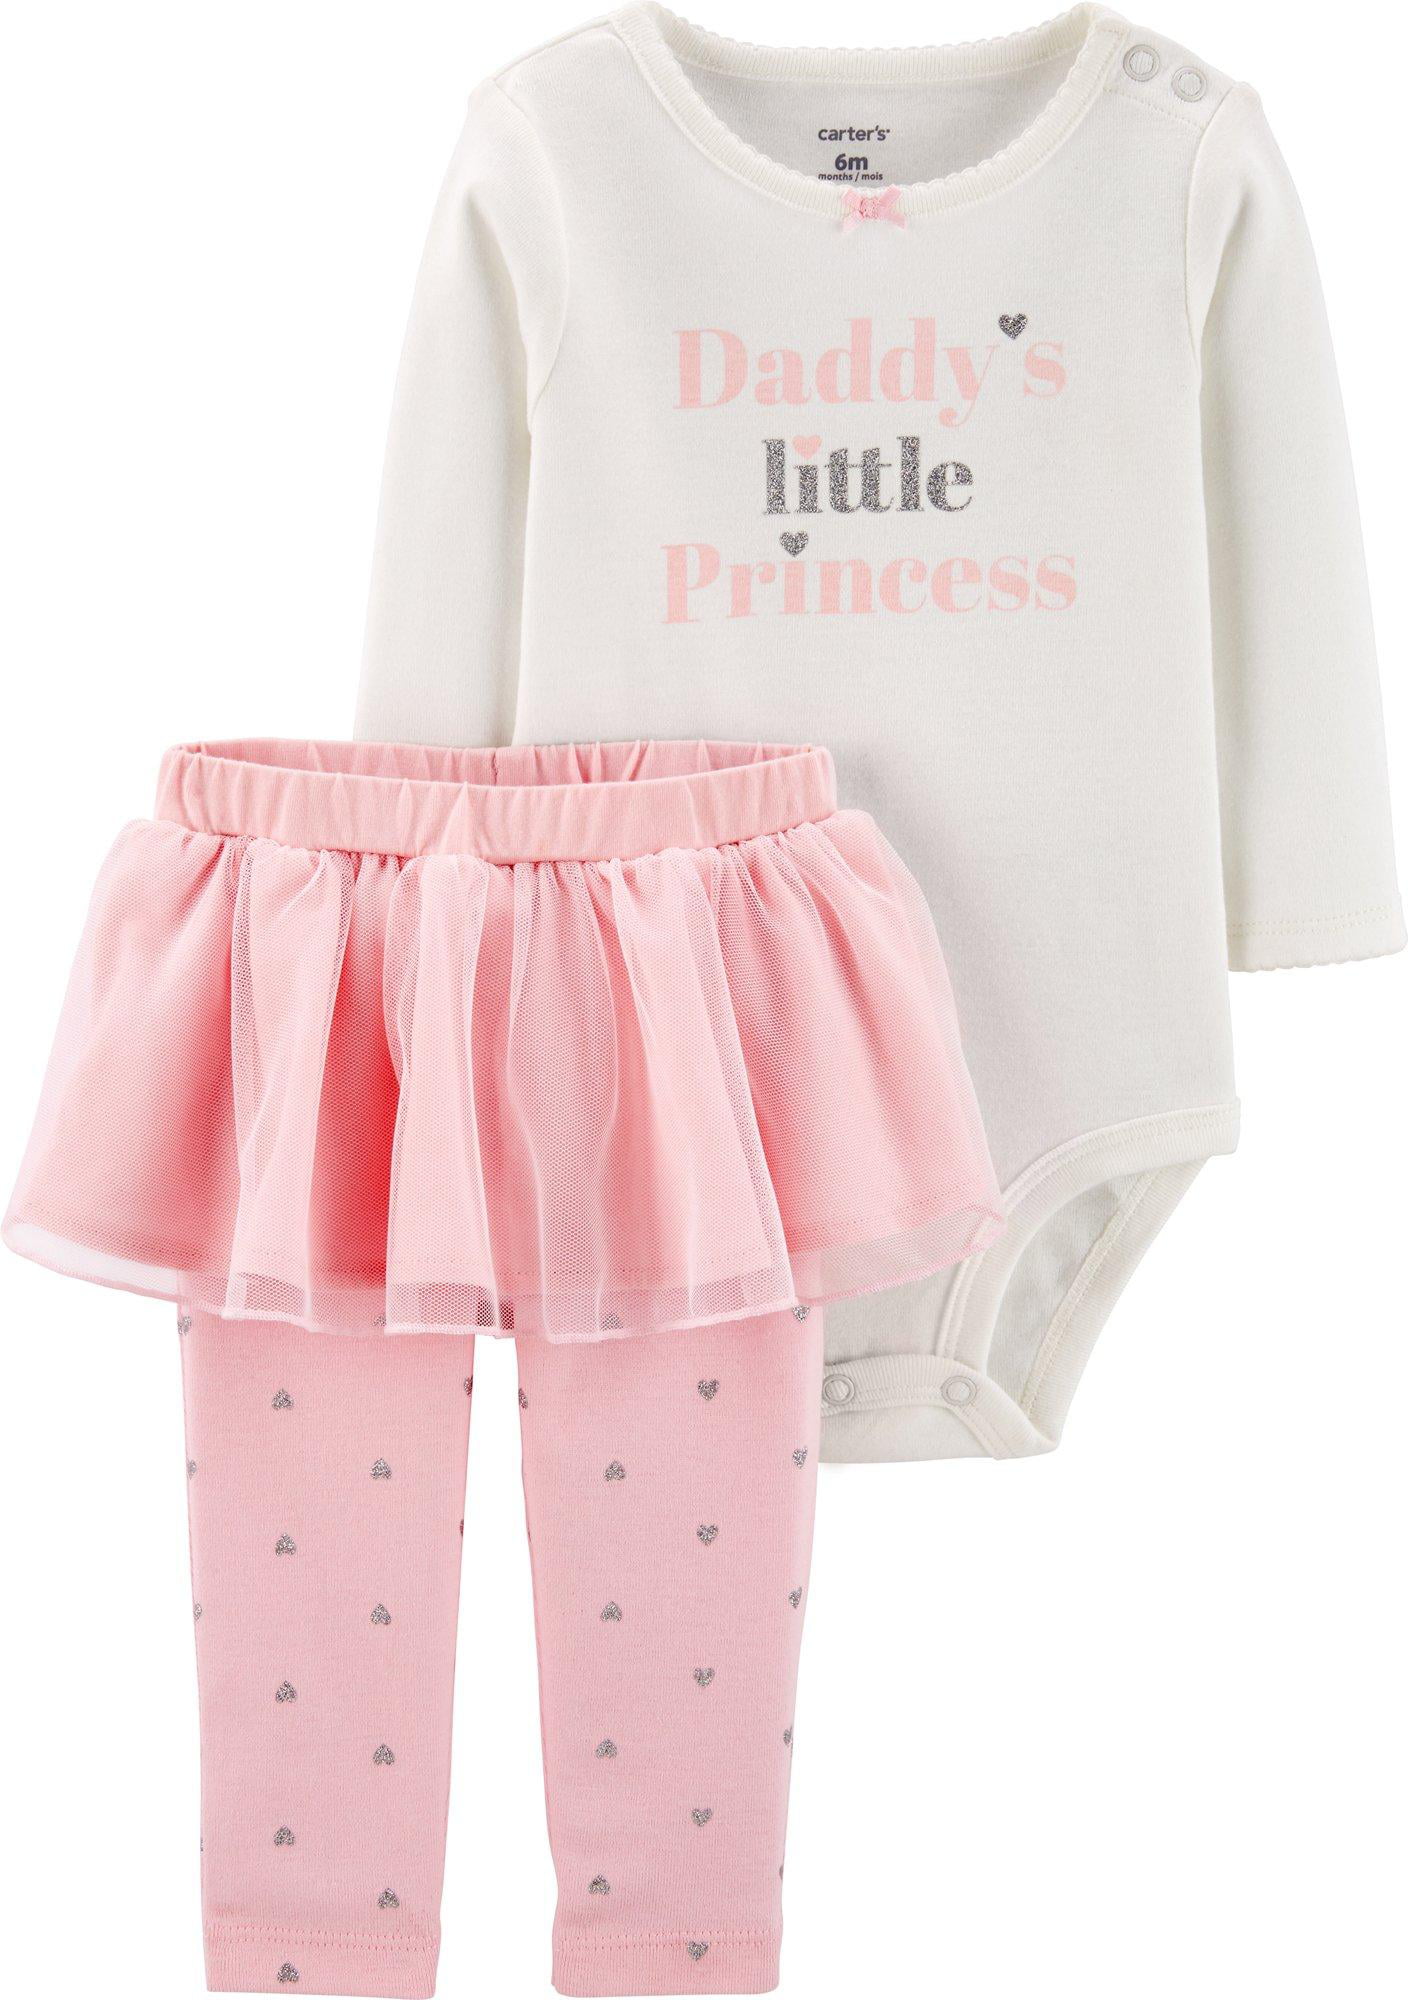 little princess clothing